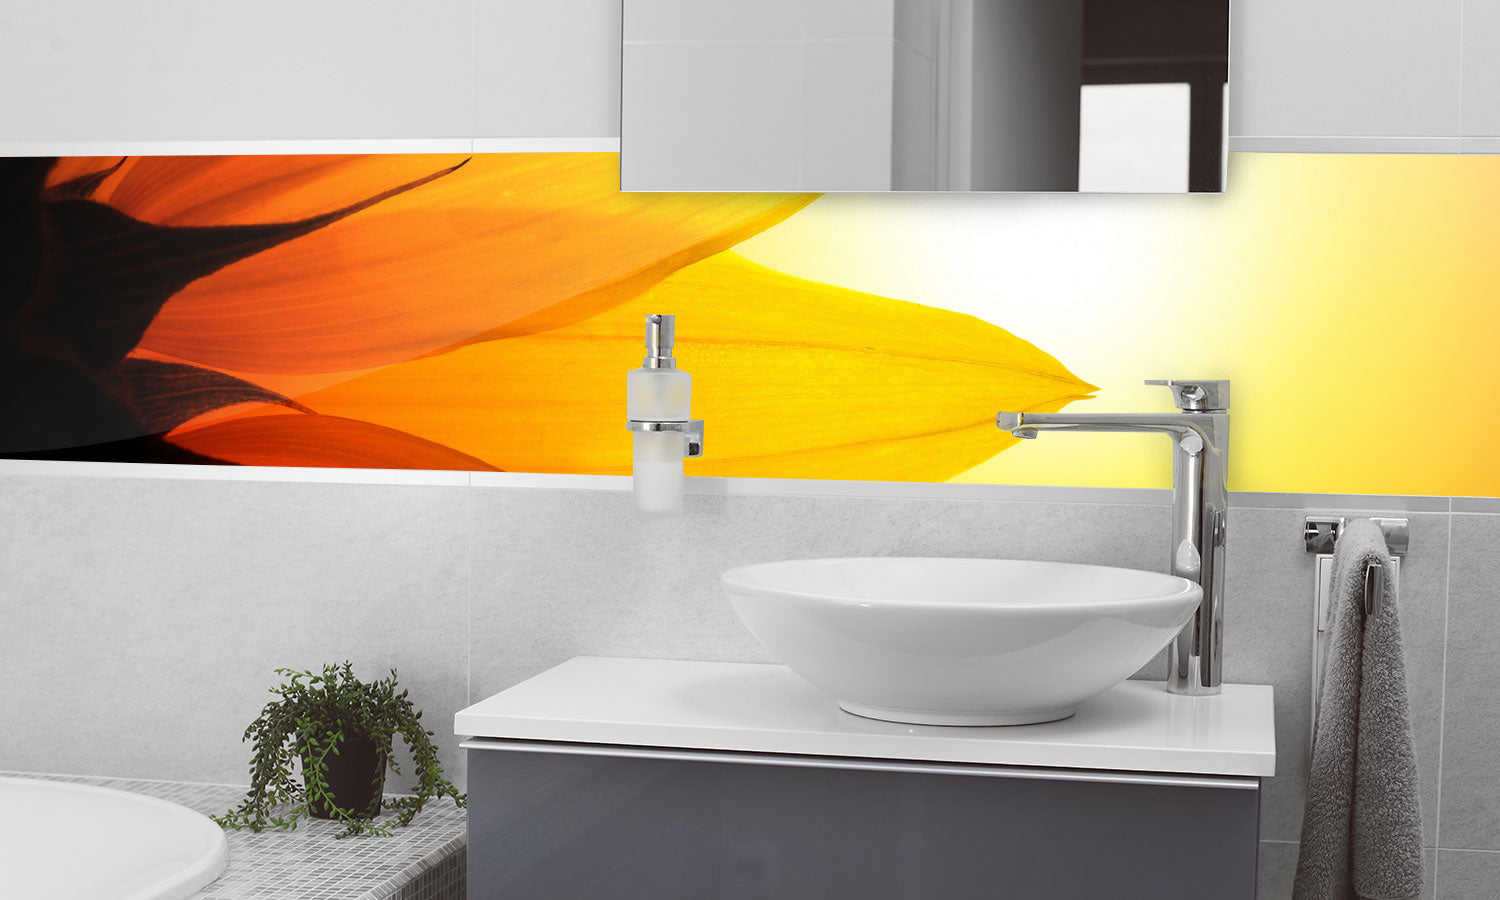 Stakla za kuhinje   Sunflower -  Stakleni / PVC ploče / Pleksiglas -  sa printom za kuhinju, Zidne obloge PKU291